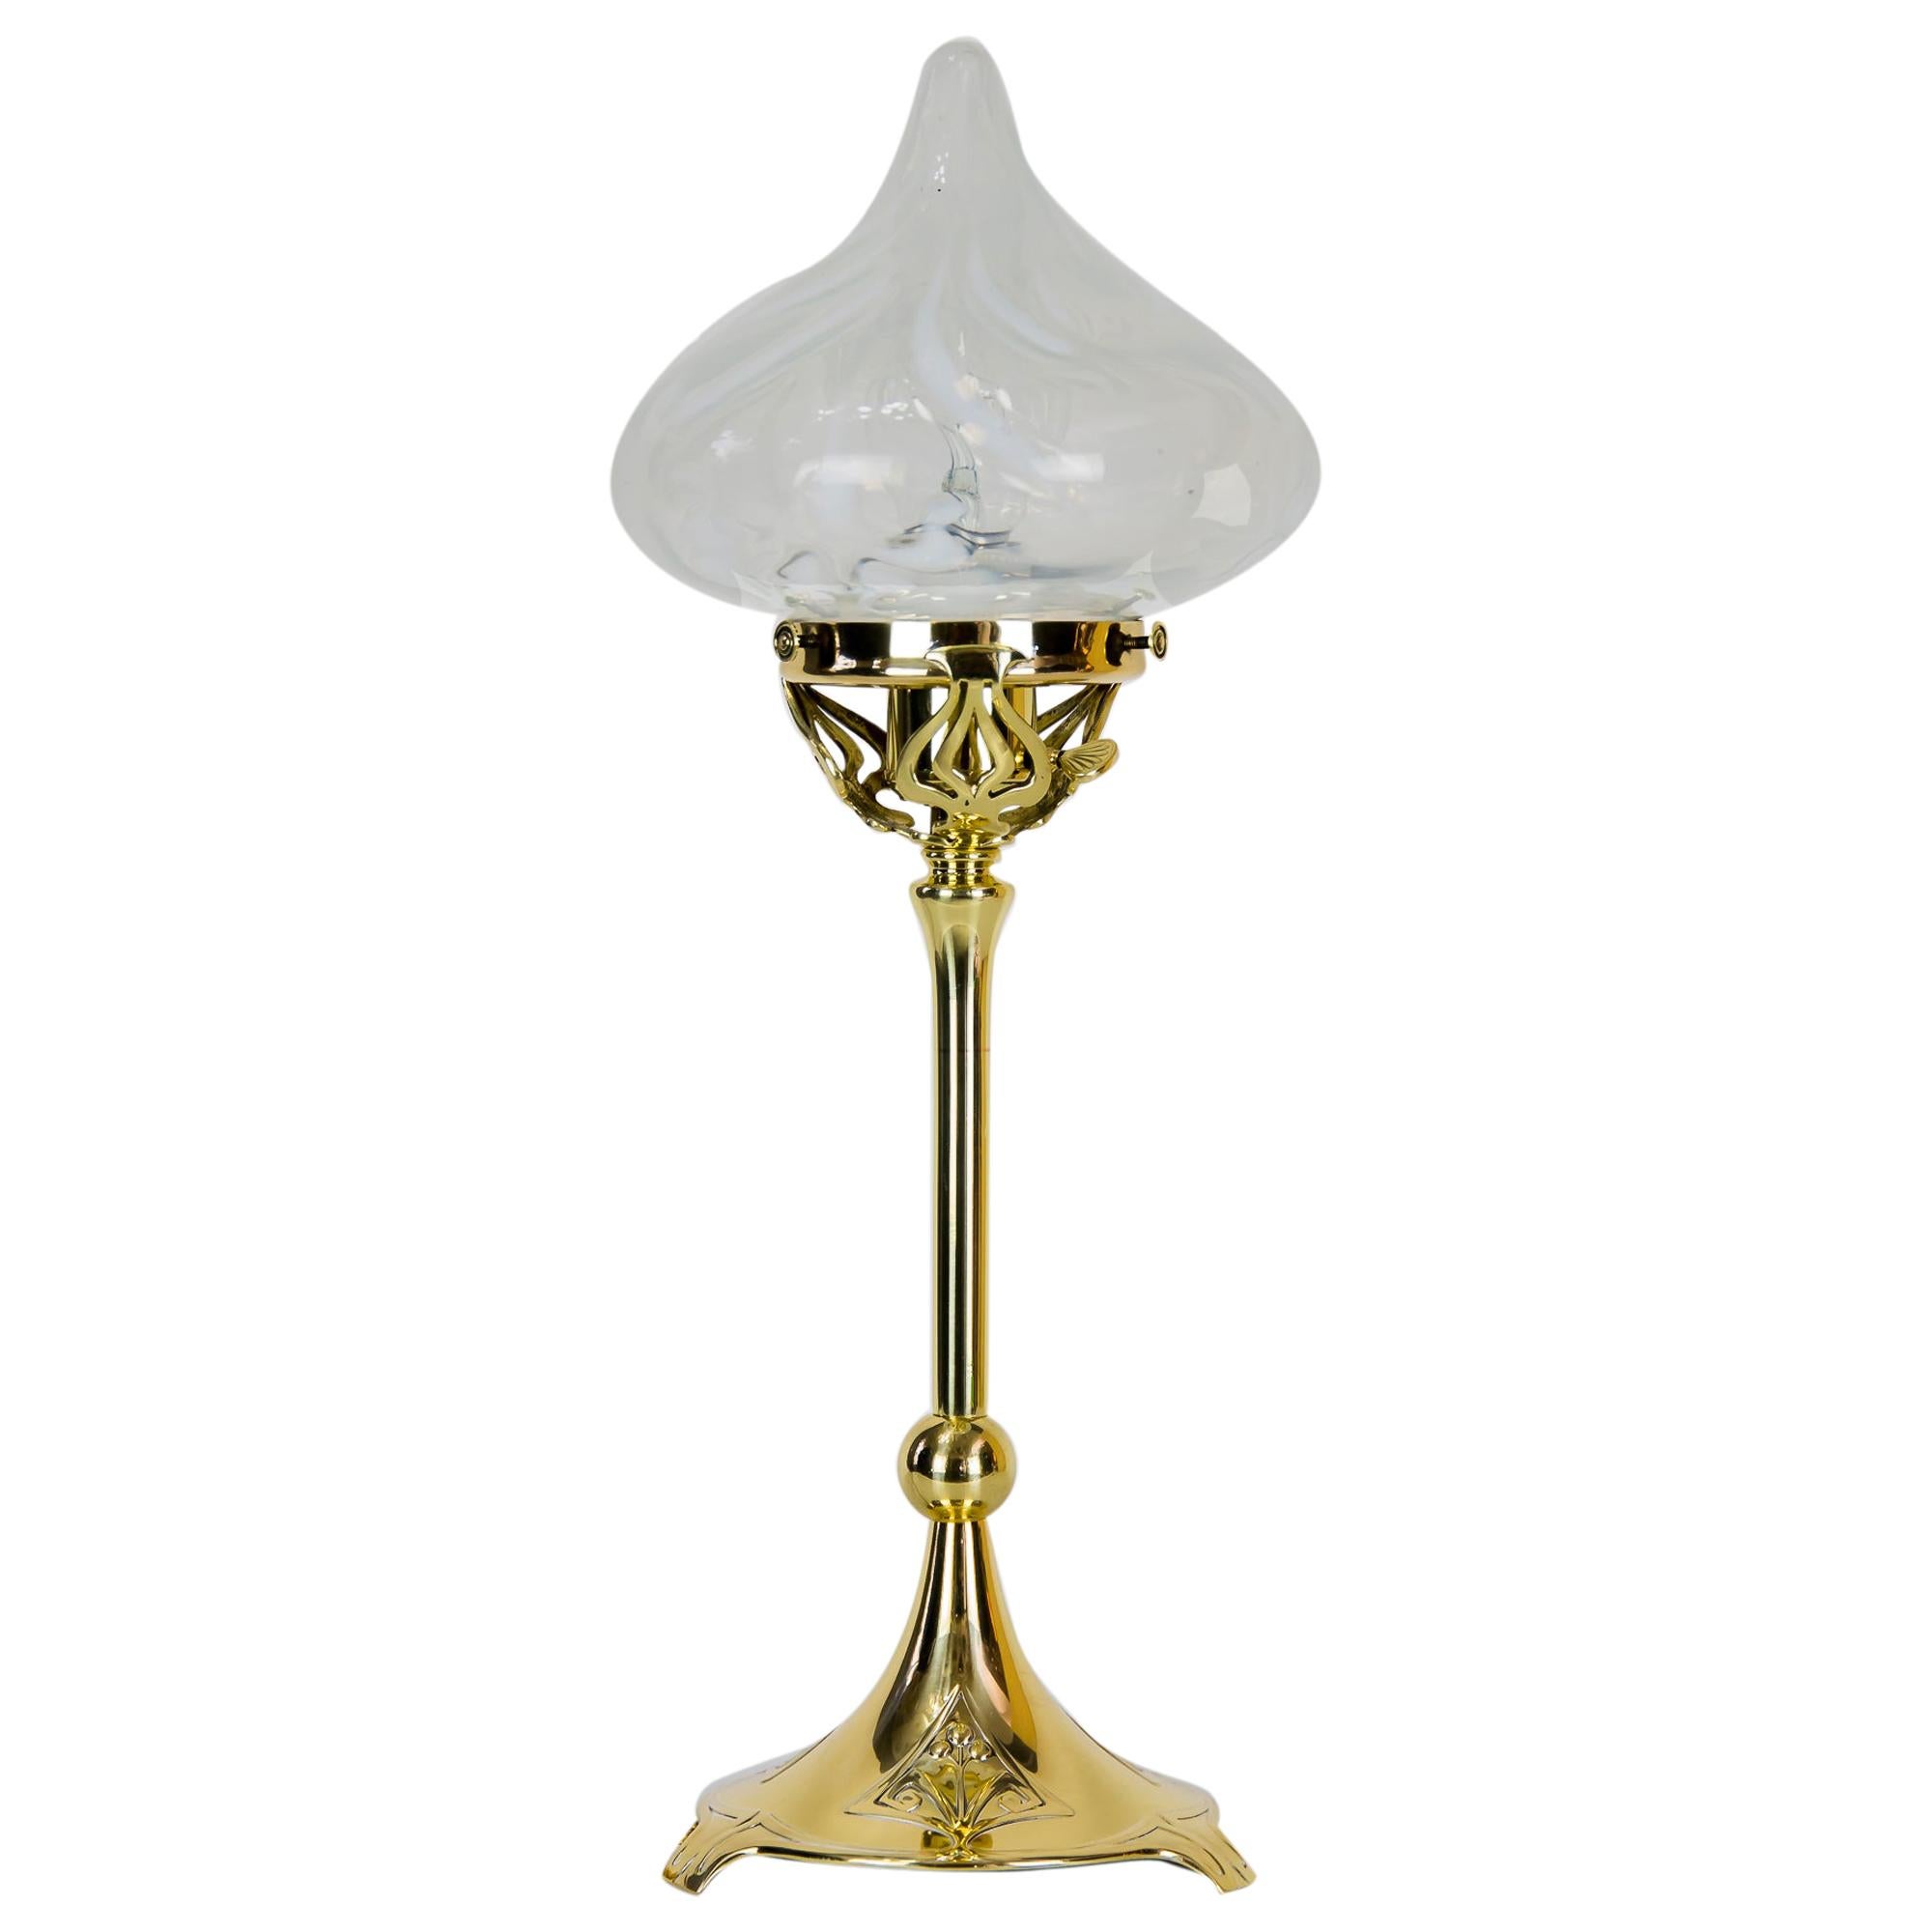 Jugendstil Floral Lamp Vienna 1905s with Opaline Glass Shade